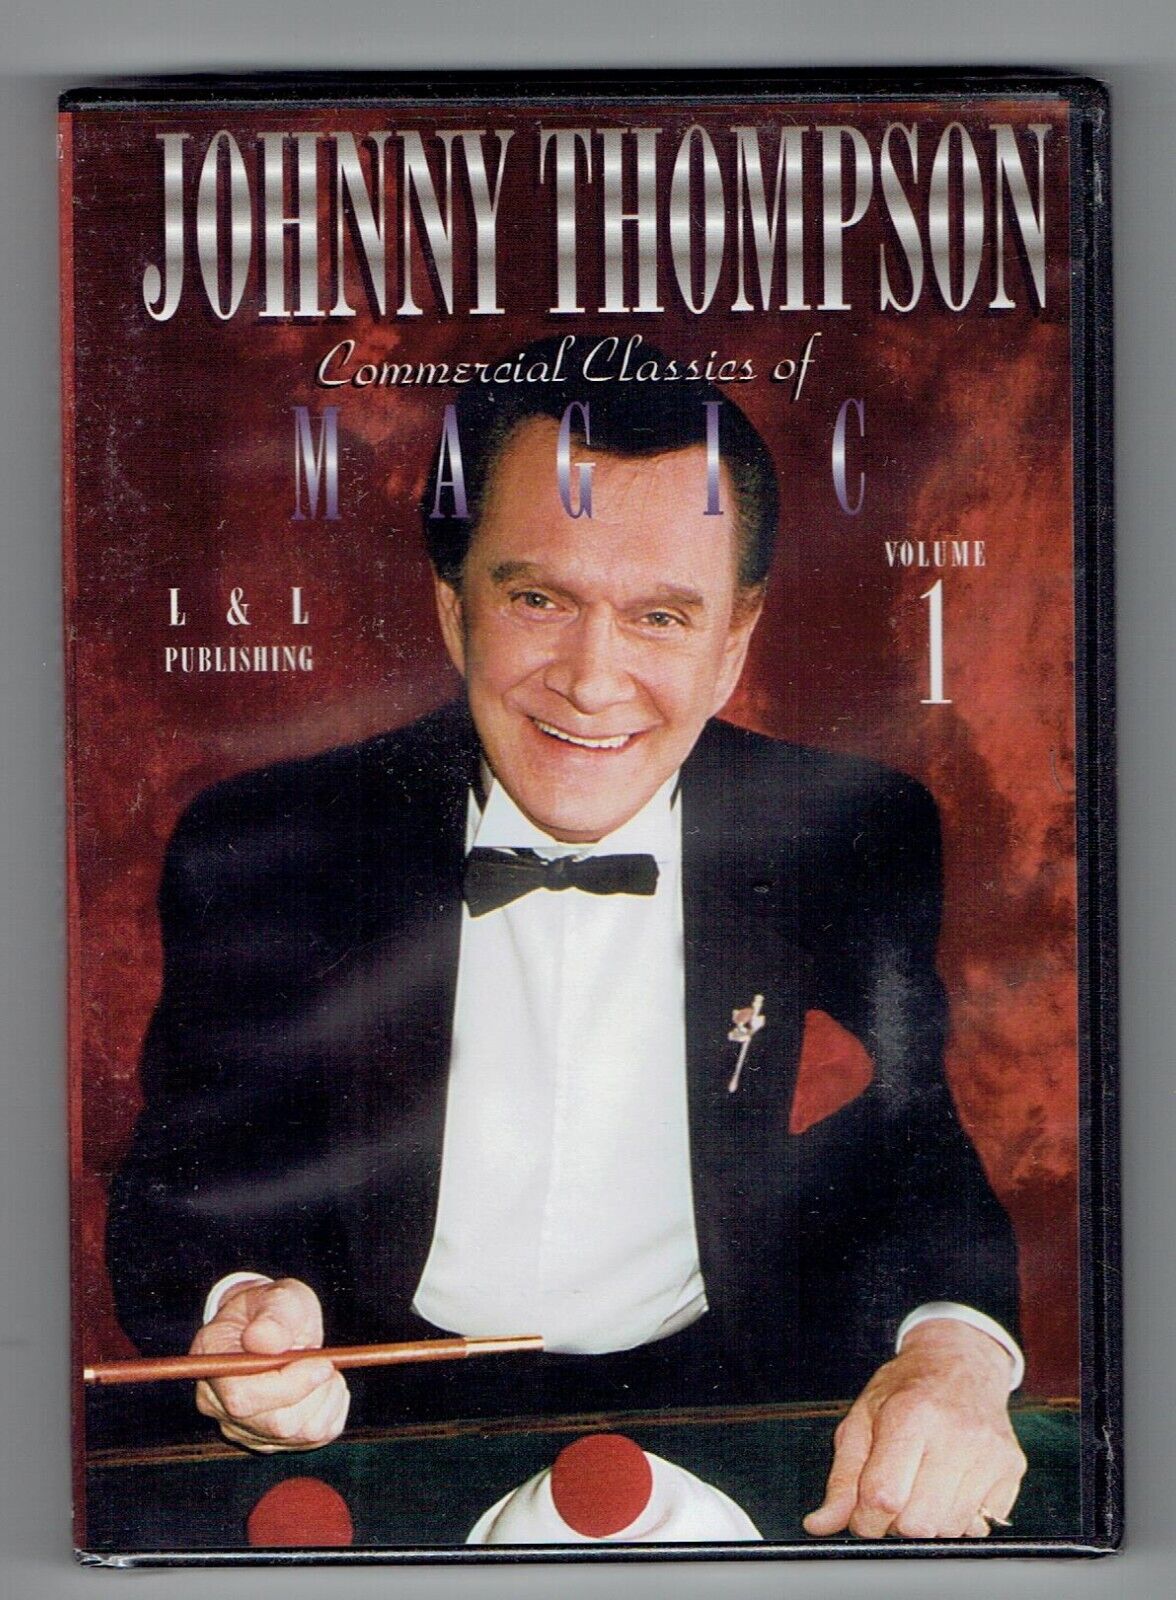 Johnny Thompson\'s Commercial Classics of Magic Volume 1 - New Magic DVD